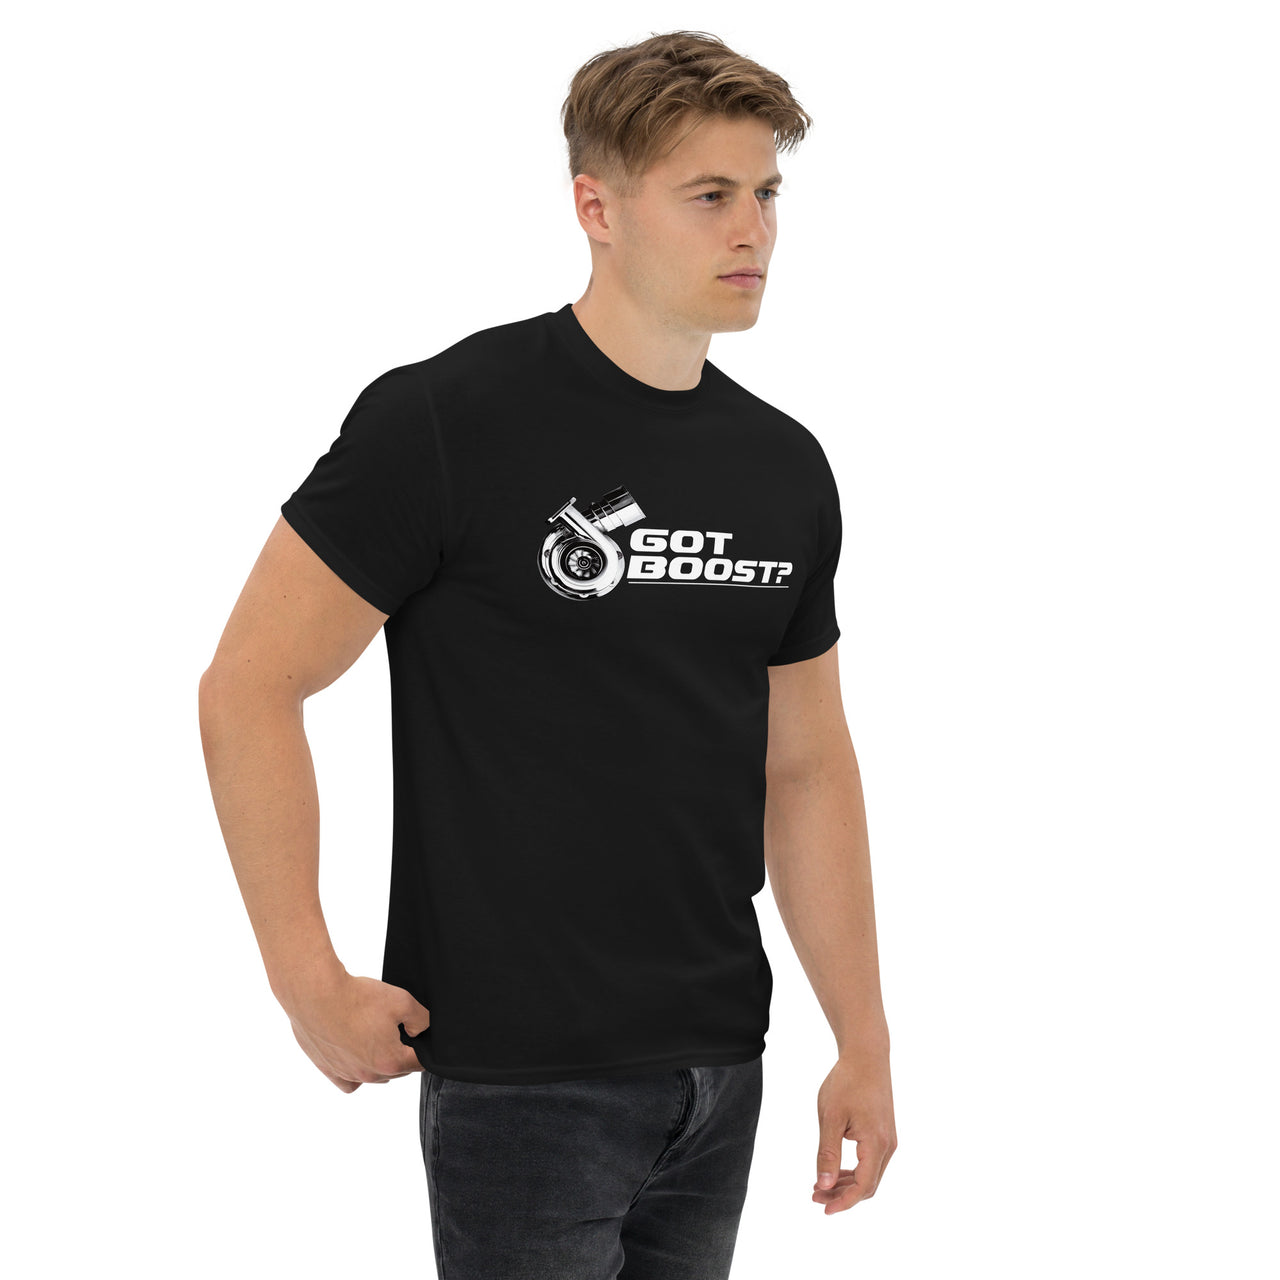 Got Boost? Funny Car Guy Turbo T-Shirt modeled in black